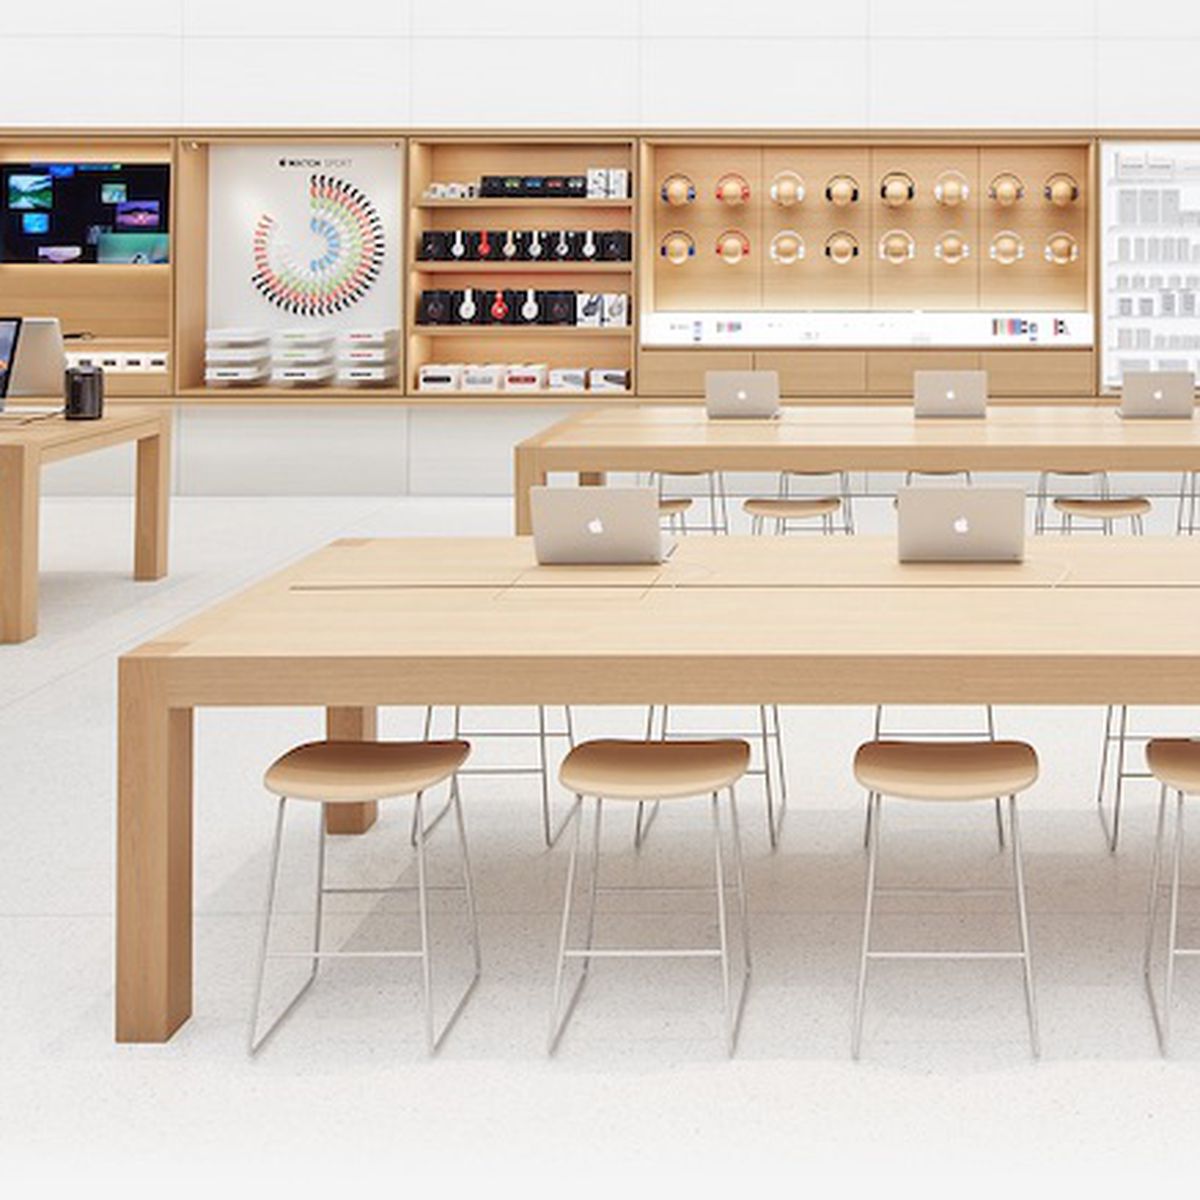 NorthPark Center - Apple Store - Apple